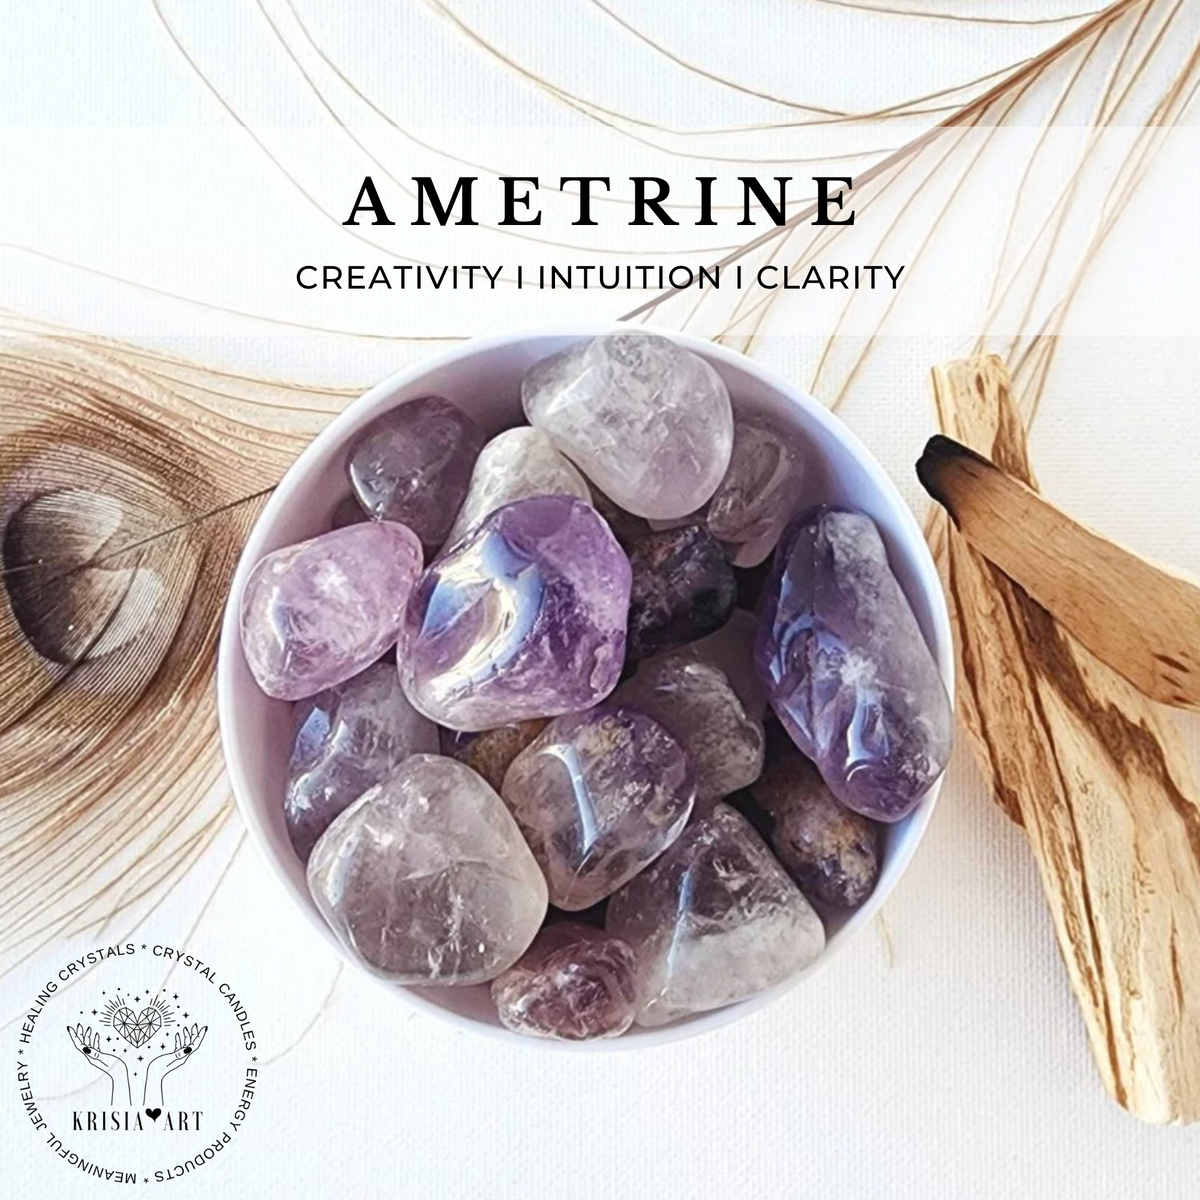 AMETRINE tumbled stone for creativity, intuition, clarity, reiki healing solar plexus & third eye chakra meditation